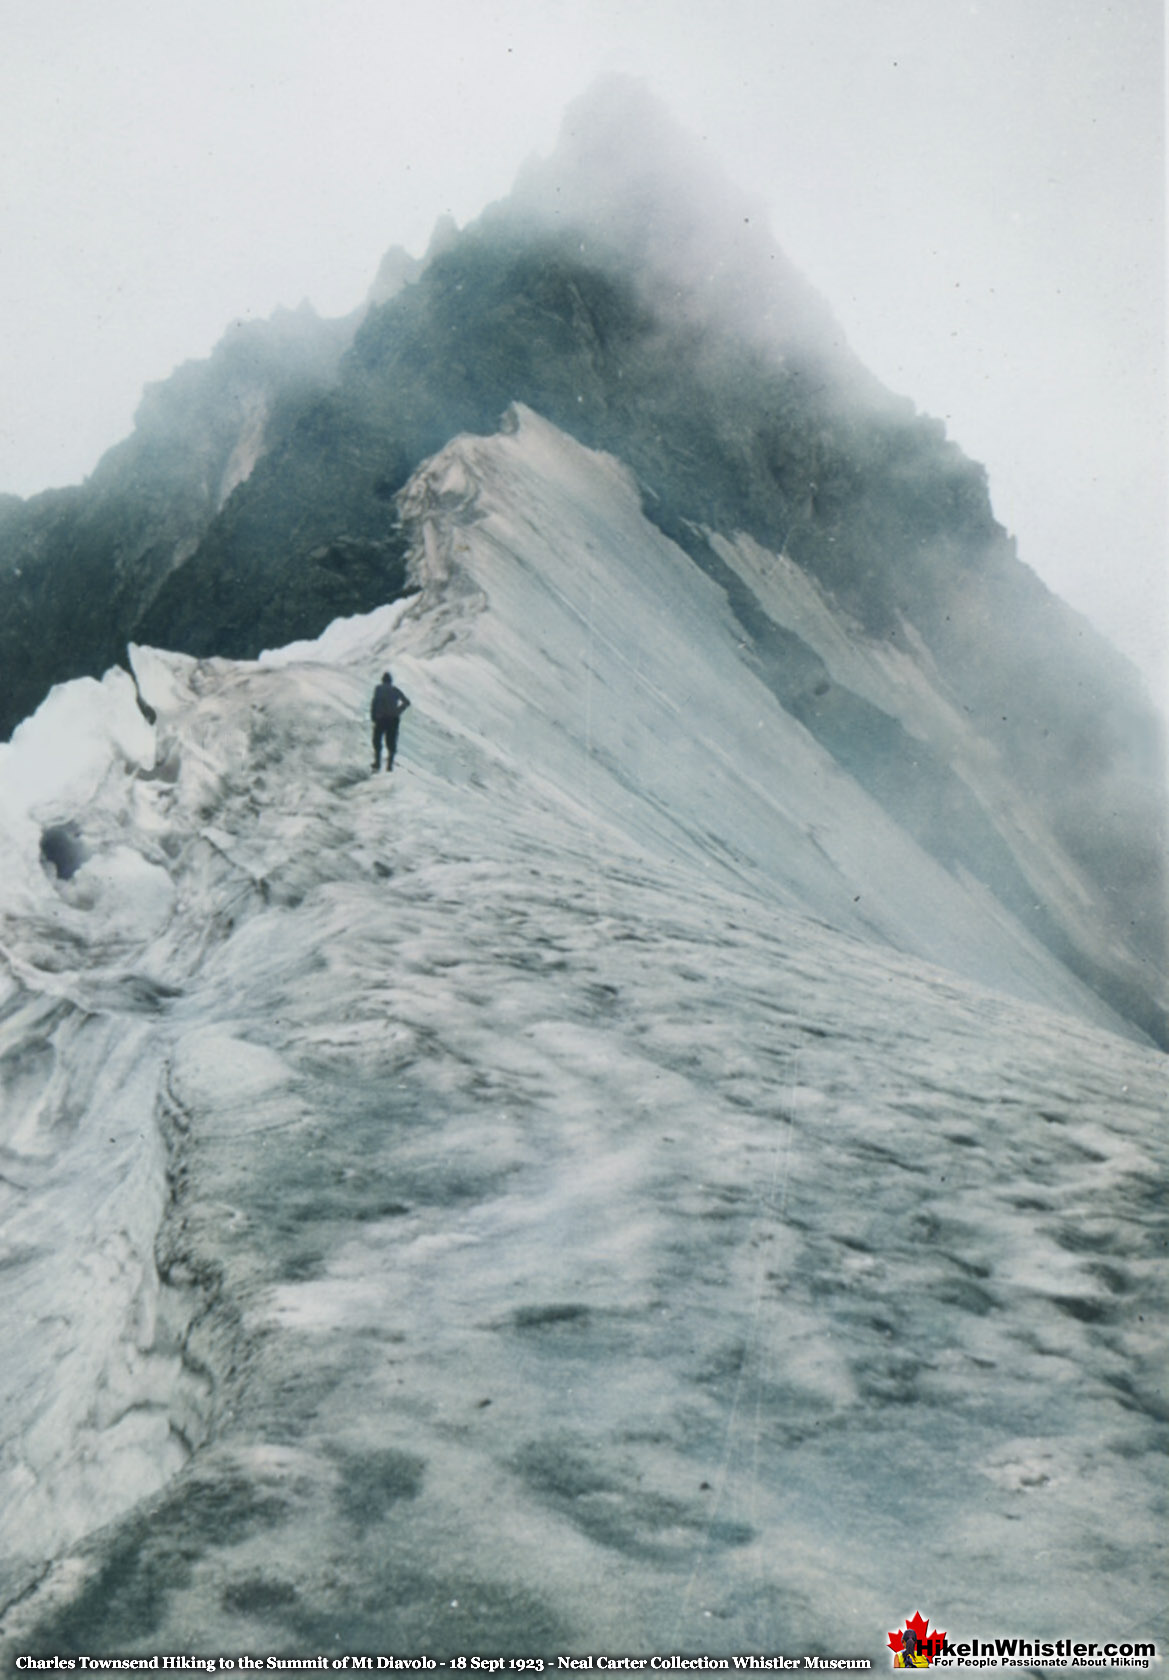 Charles Townsend Ridge to Diavolo Peak 18 Sept 1923